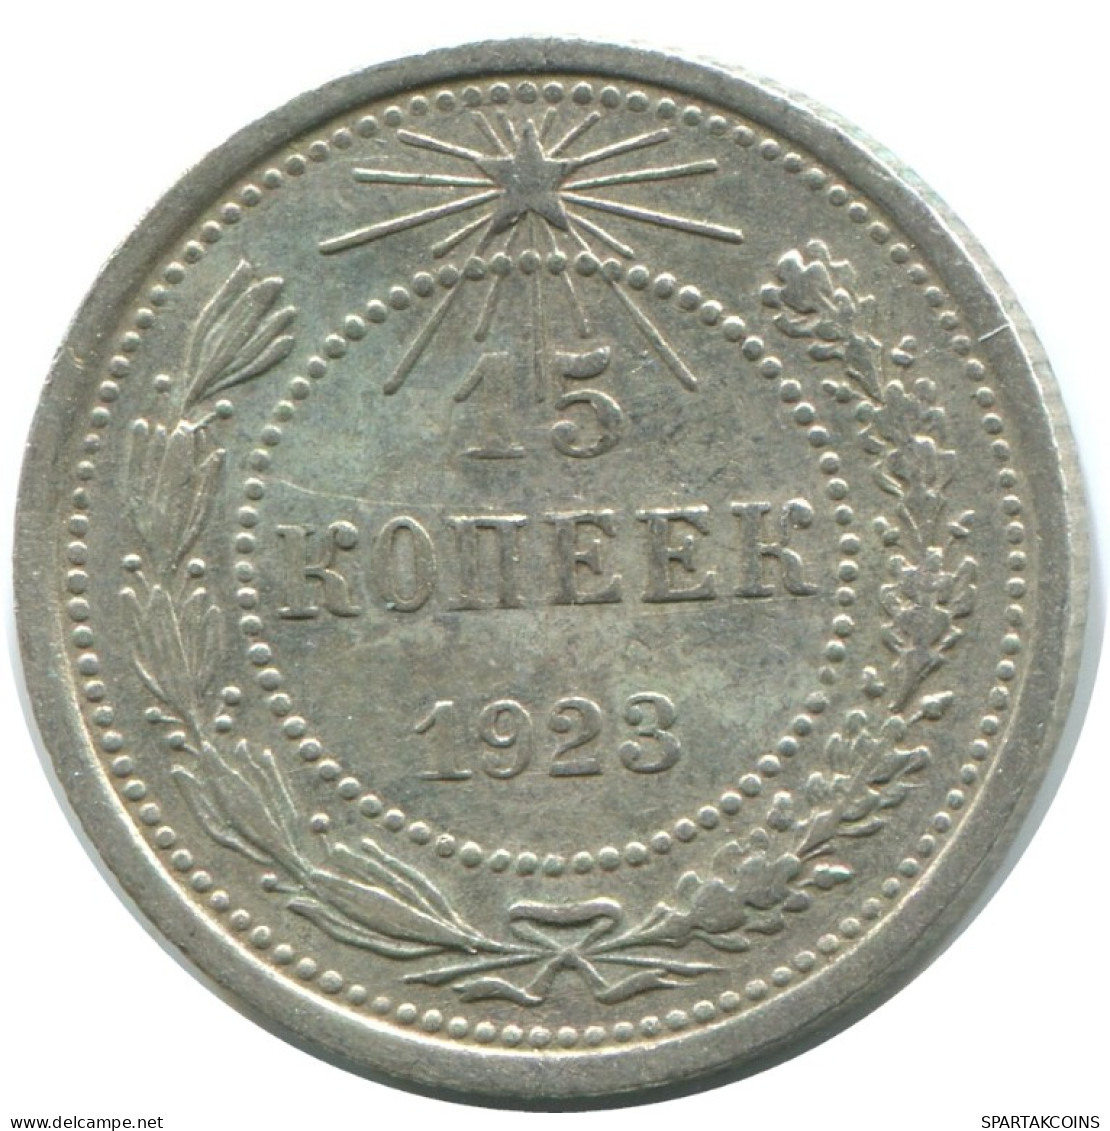 15 KOPEKS 1923 RUSSIA RSFSR SILVER Coin HIGH GRADE #AF103.4.U.A - Rusia